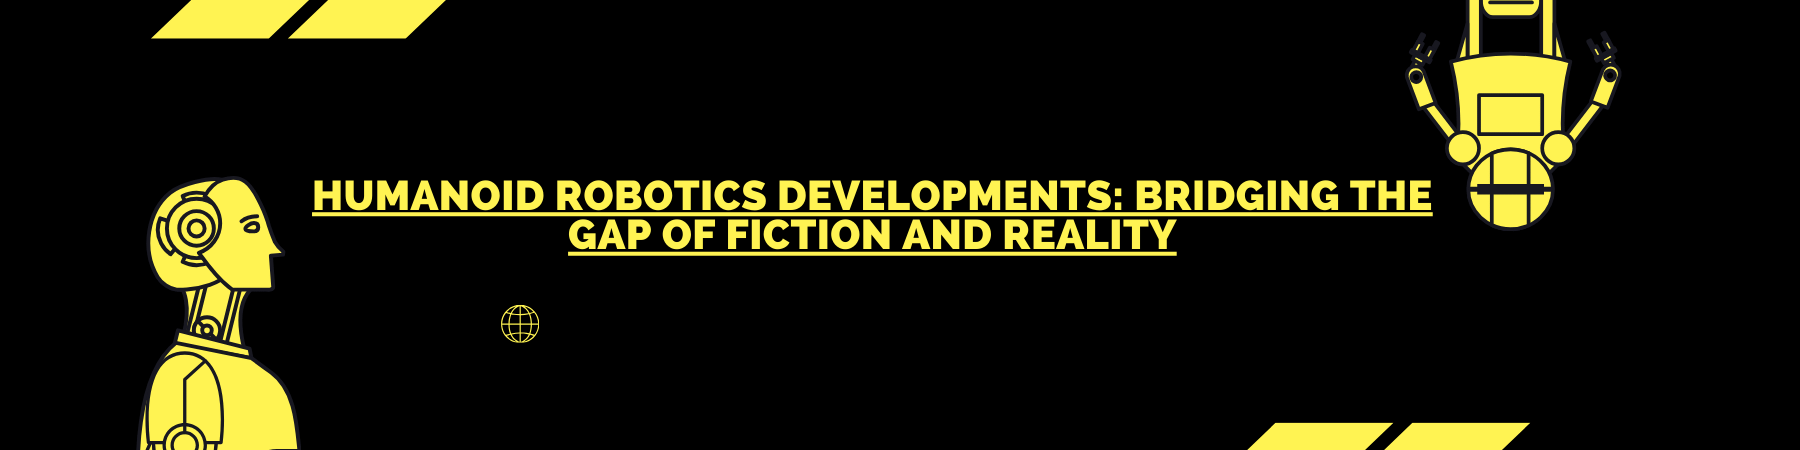 Humanoid Robotics Developments_ Bridging the Gap of Fiction and Reality